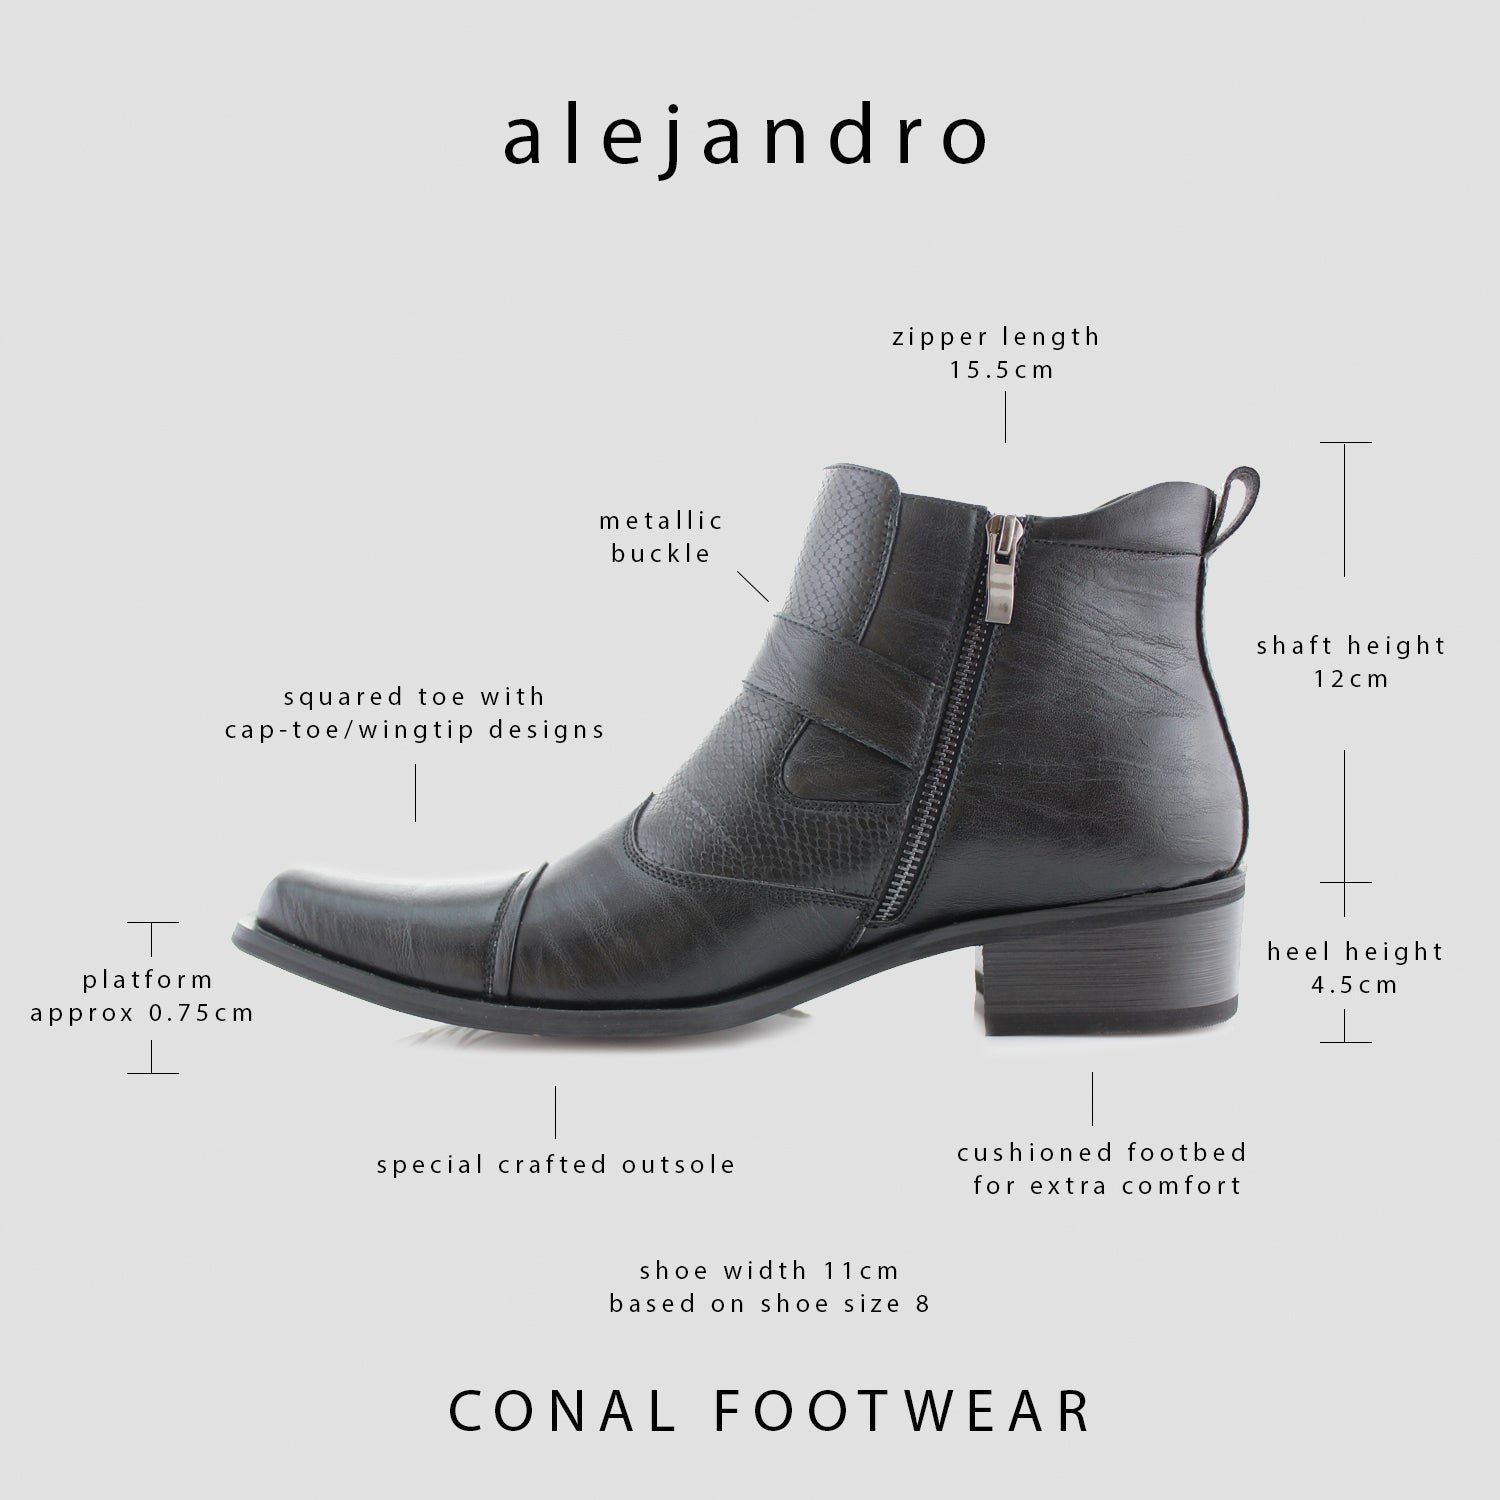 Snake Hide Embossed Cowboy Boots | Alejandro by Ferro Aldo | Conal Footwear | Description Overview